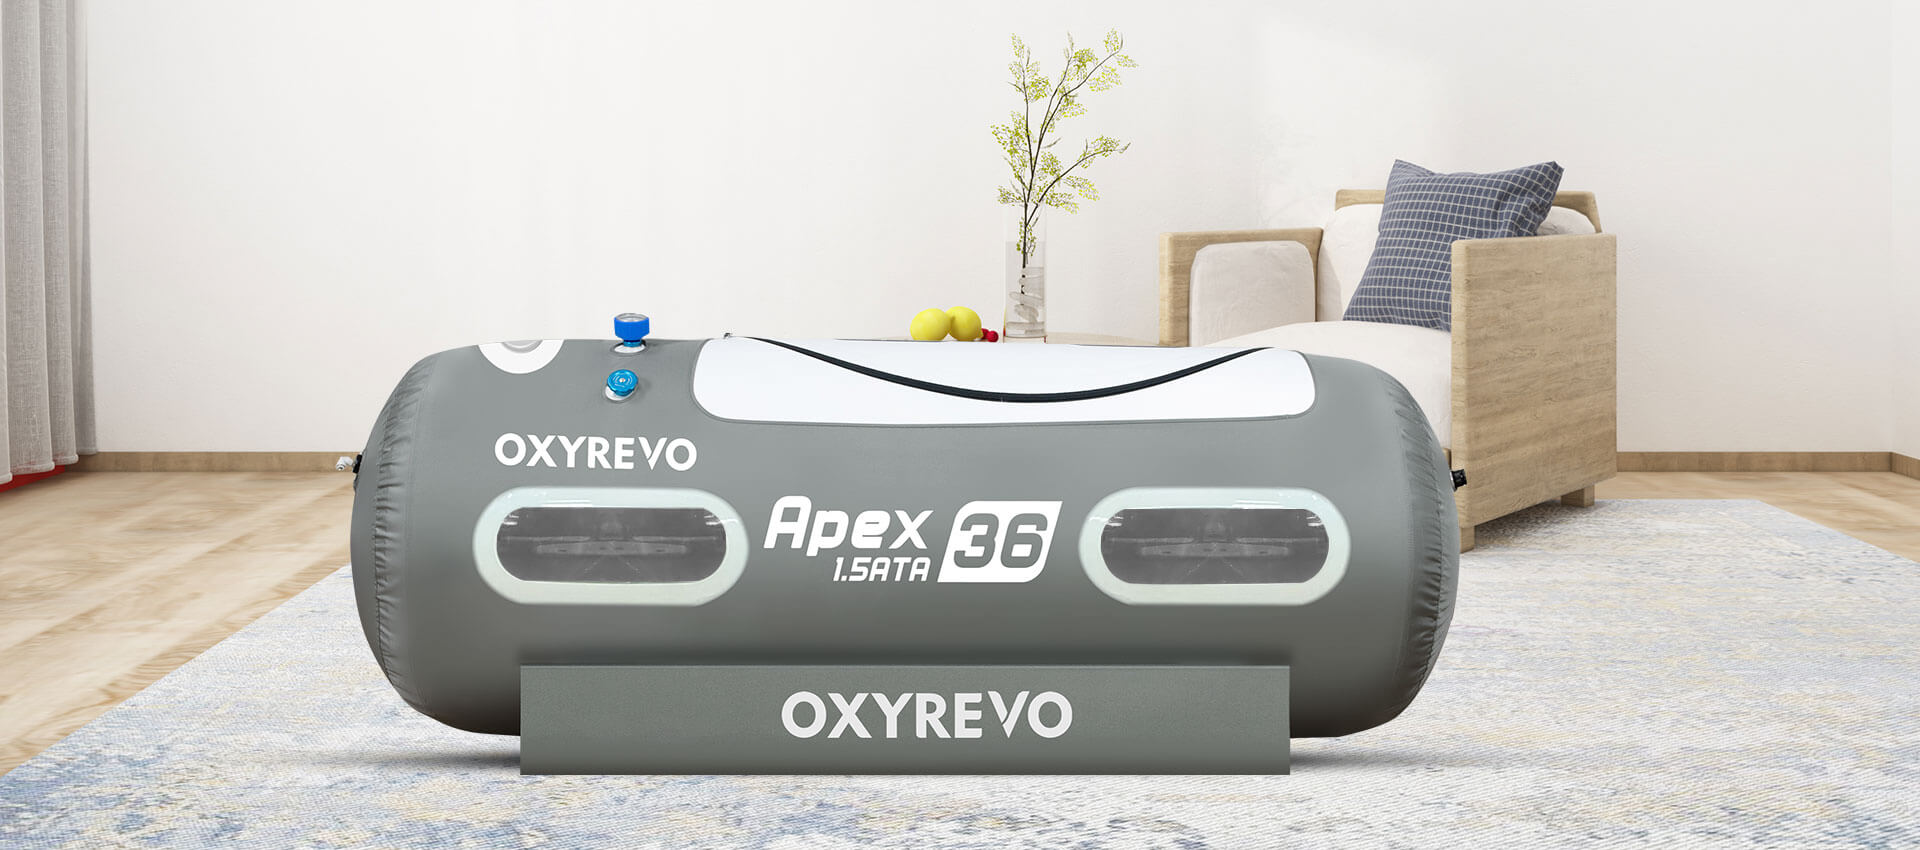 Apex36 1.5ATA Portable Hyperbaric Chamber